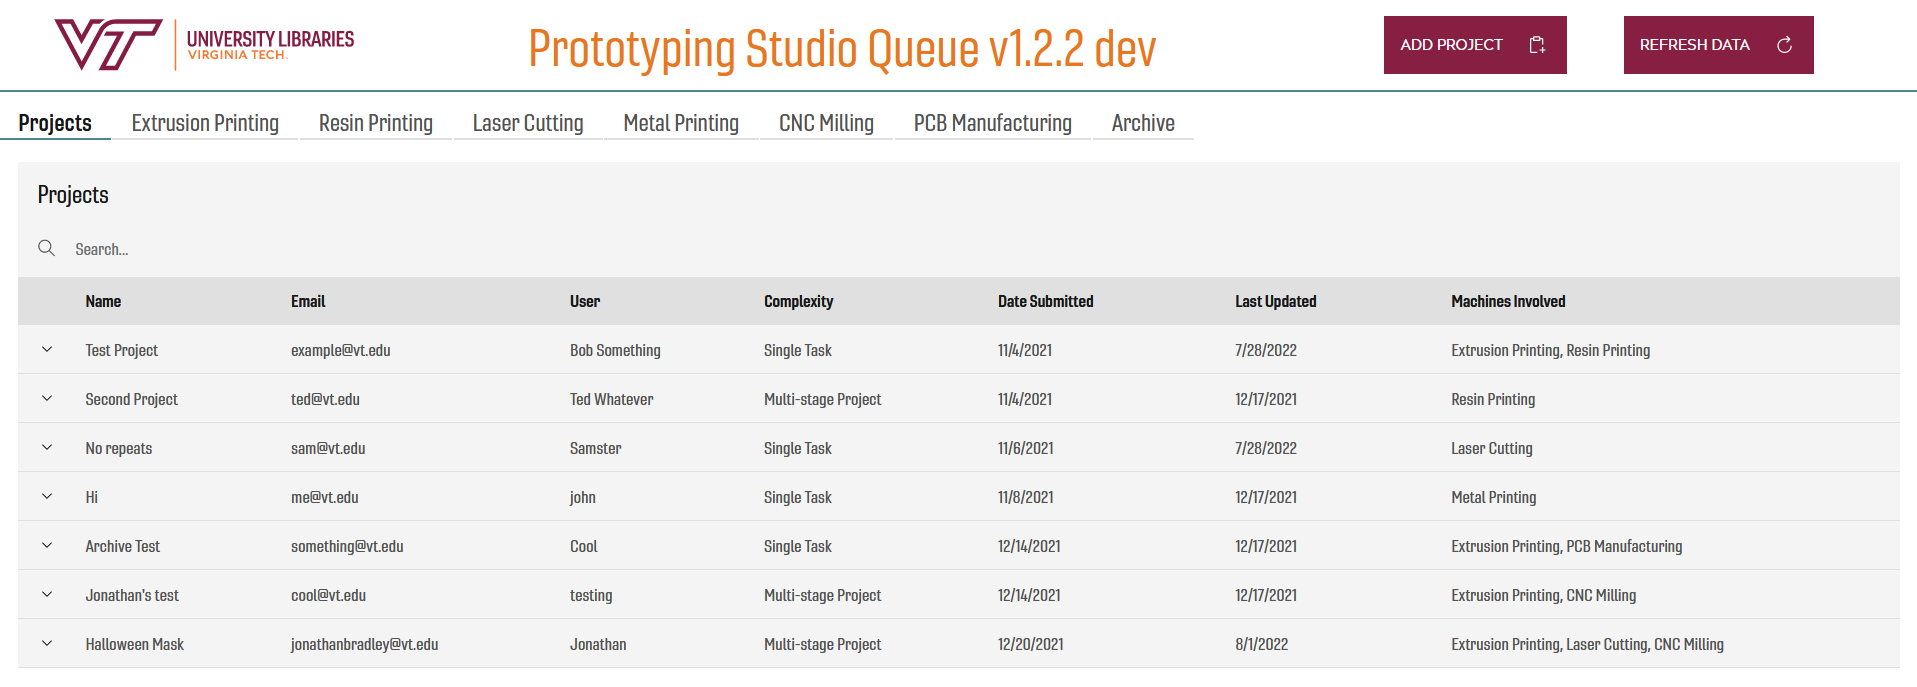 The main screen of the new Prototyping Studio Queue